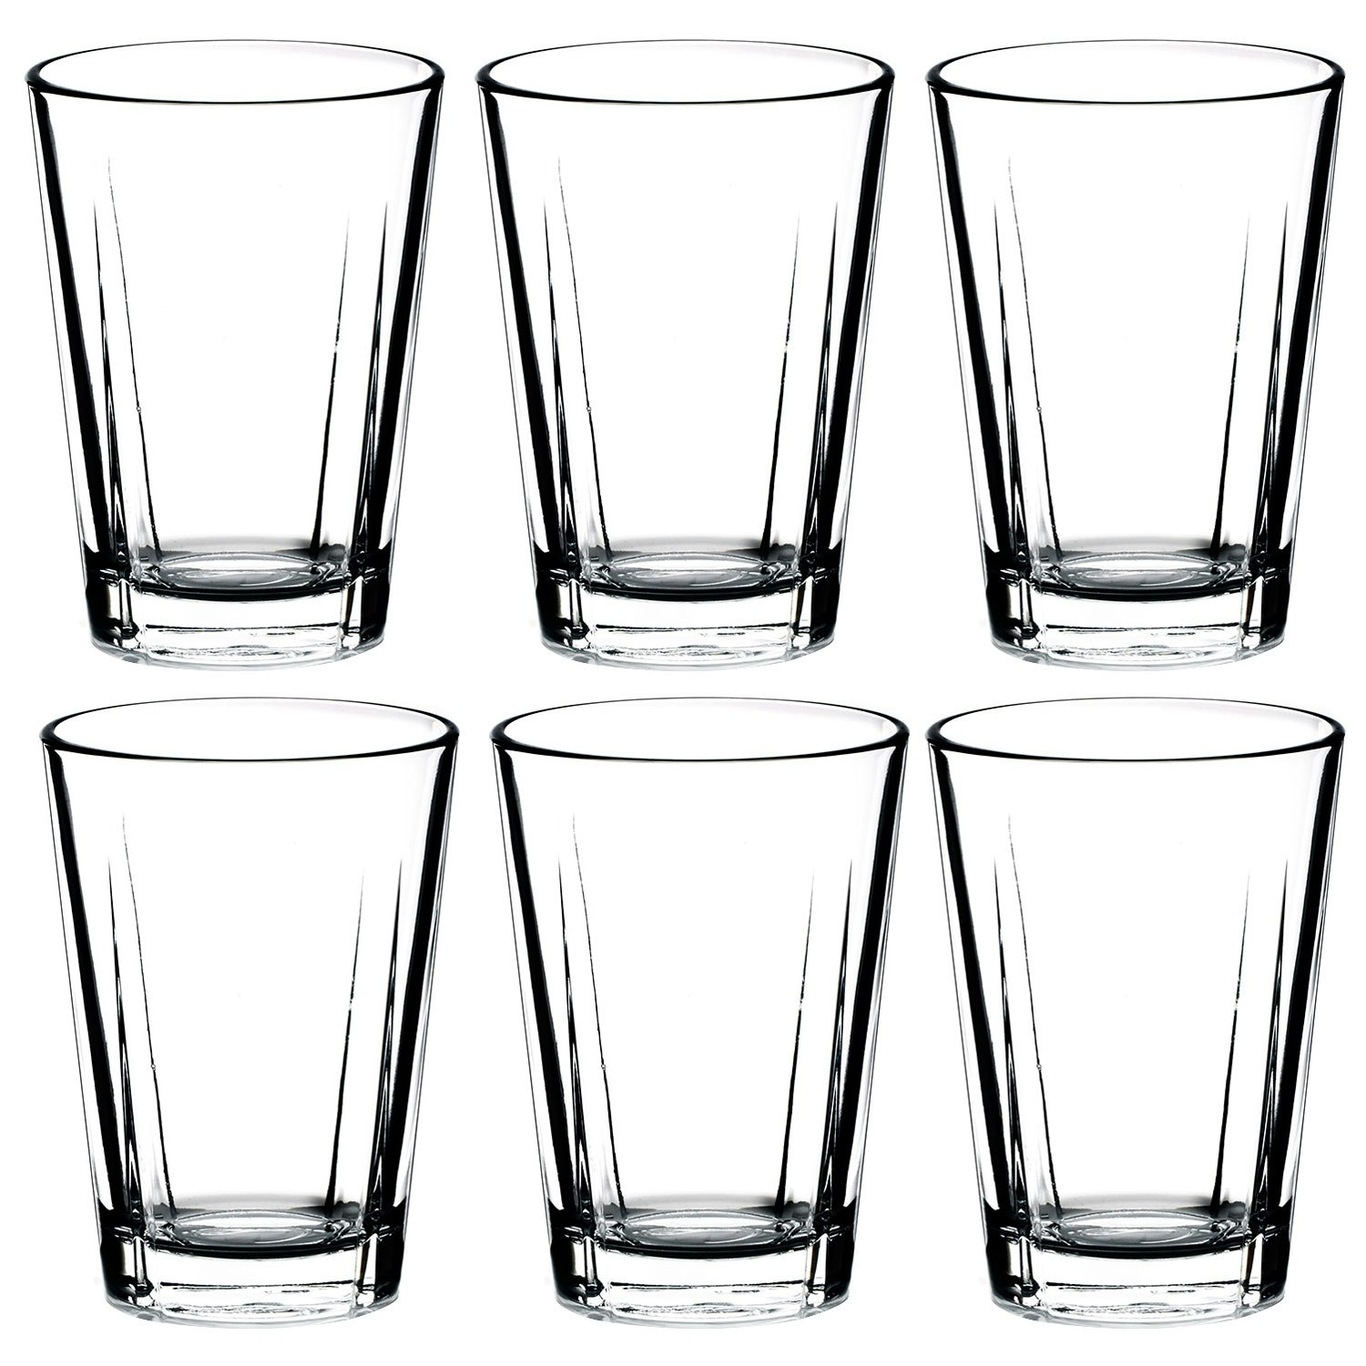 https://royaldesign.com/image/2/rosendahl-copenhagen-grand-cru-drinking-glass-6-pcs-0?w=800&quality=80